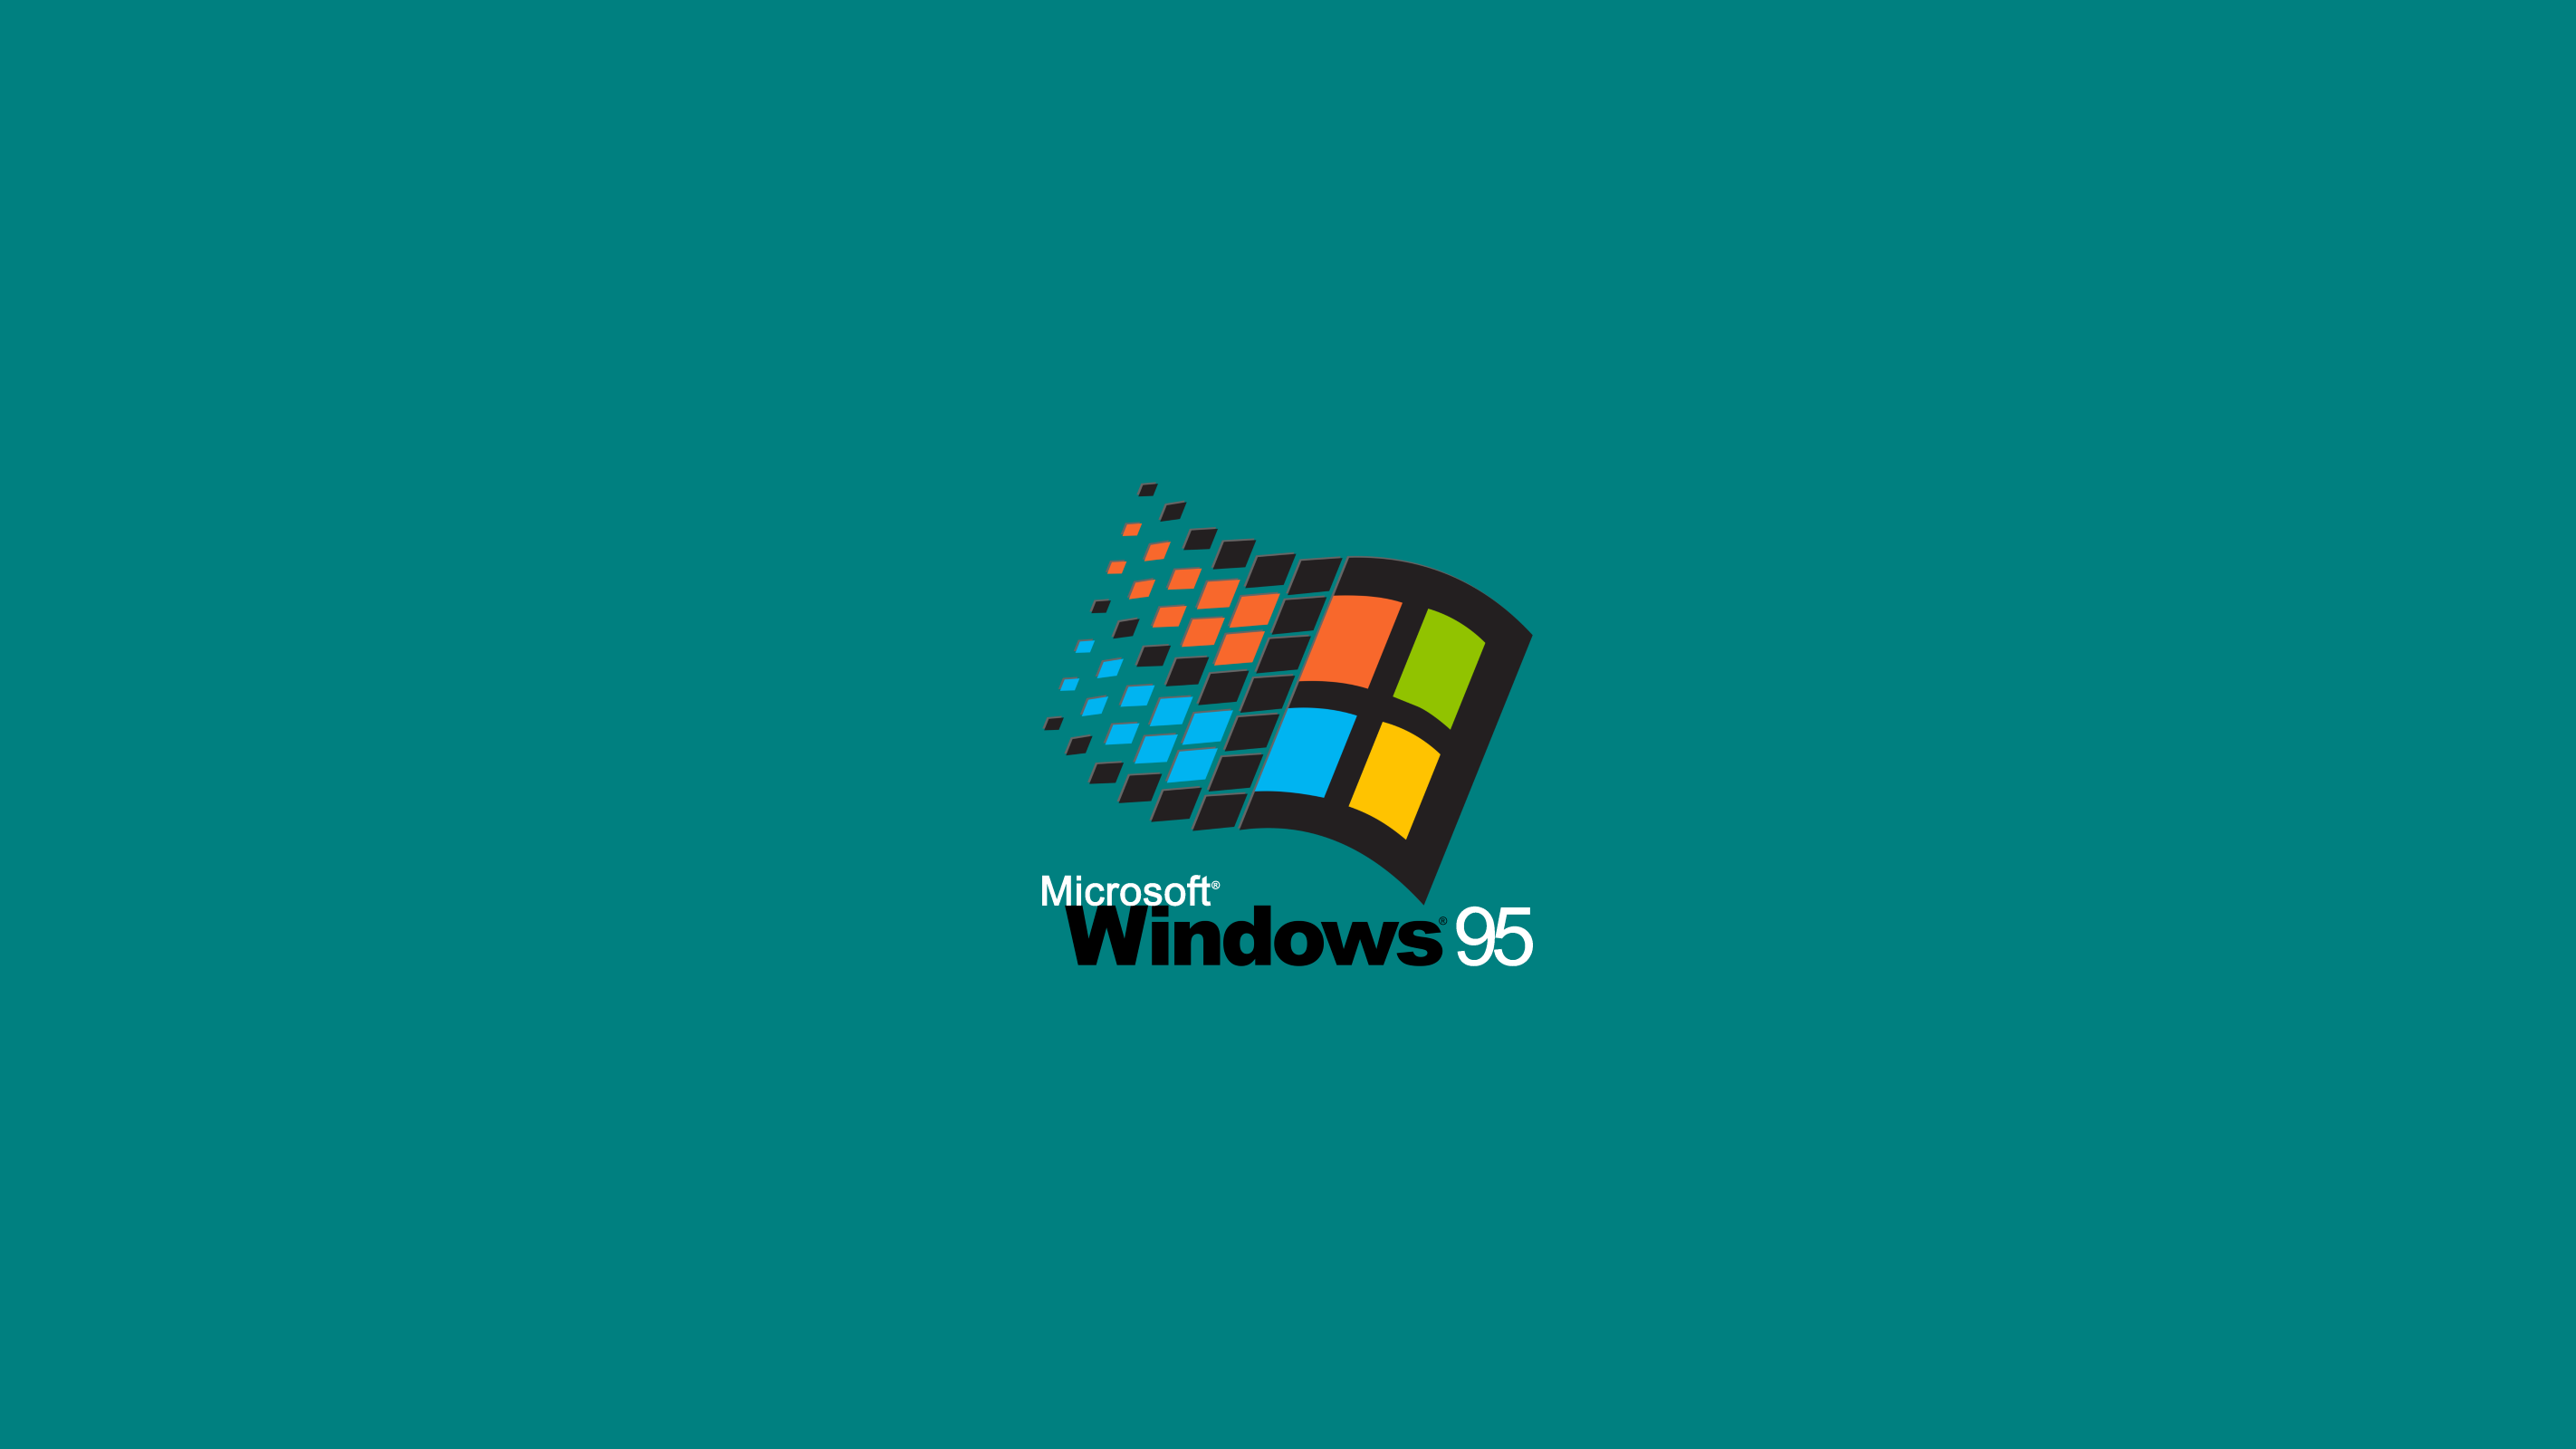 Windows 95 Microsoft Windows Logo Digital Art 2845x1600